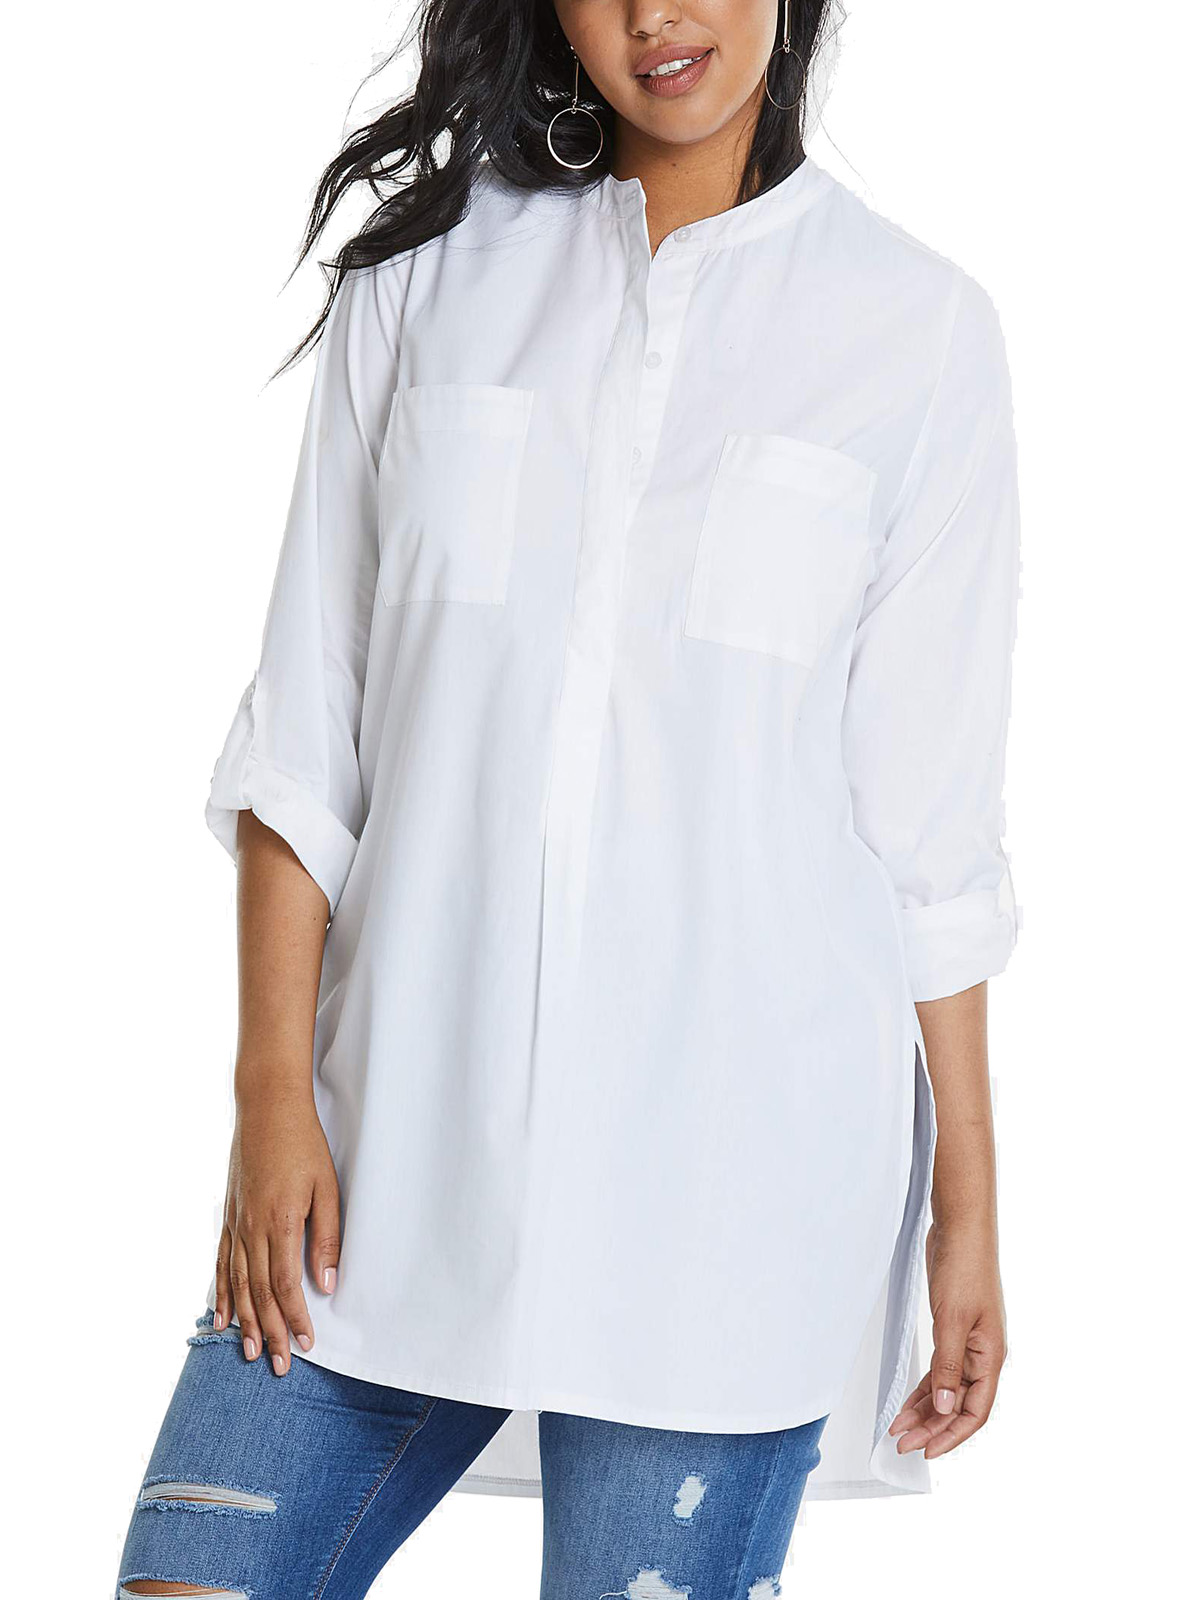 Capsule - - Capsule WHITE Pure Cotton Longline Shirt Tunic - Plus Size ...